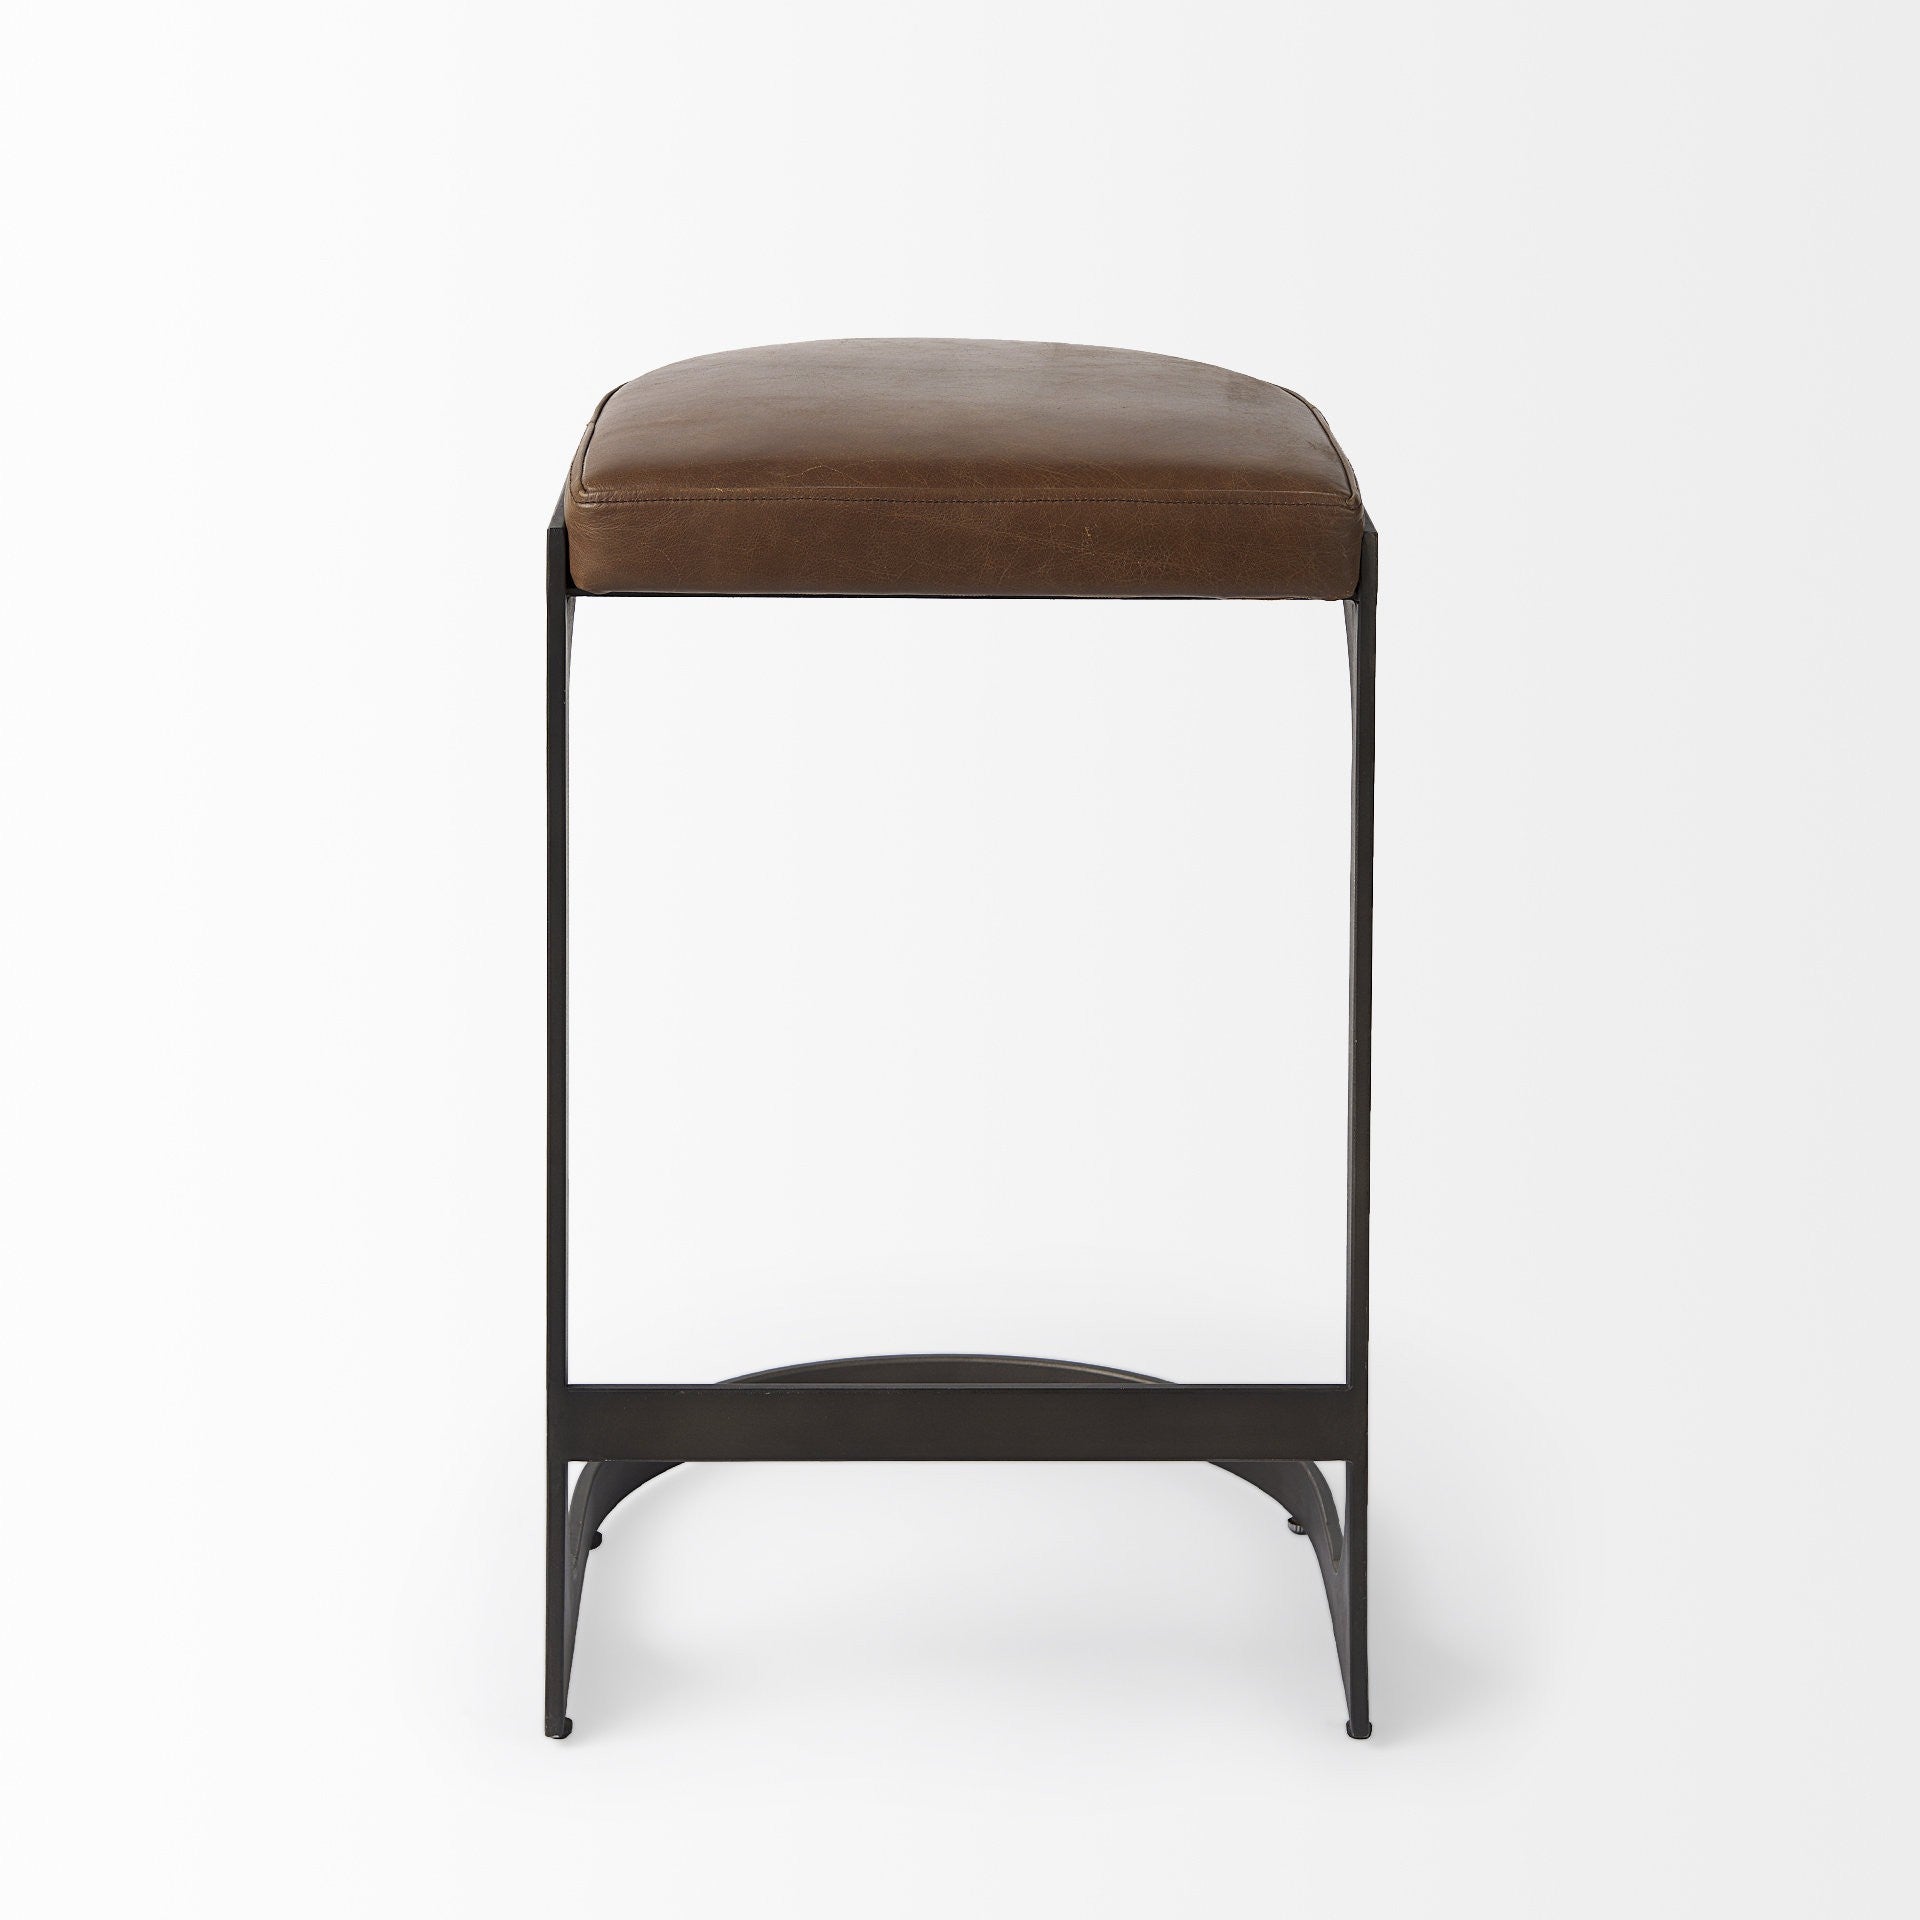 29" Medium Brown Iron Backless Bar Chair